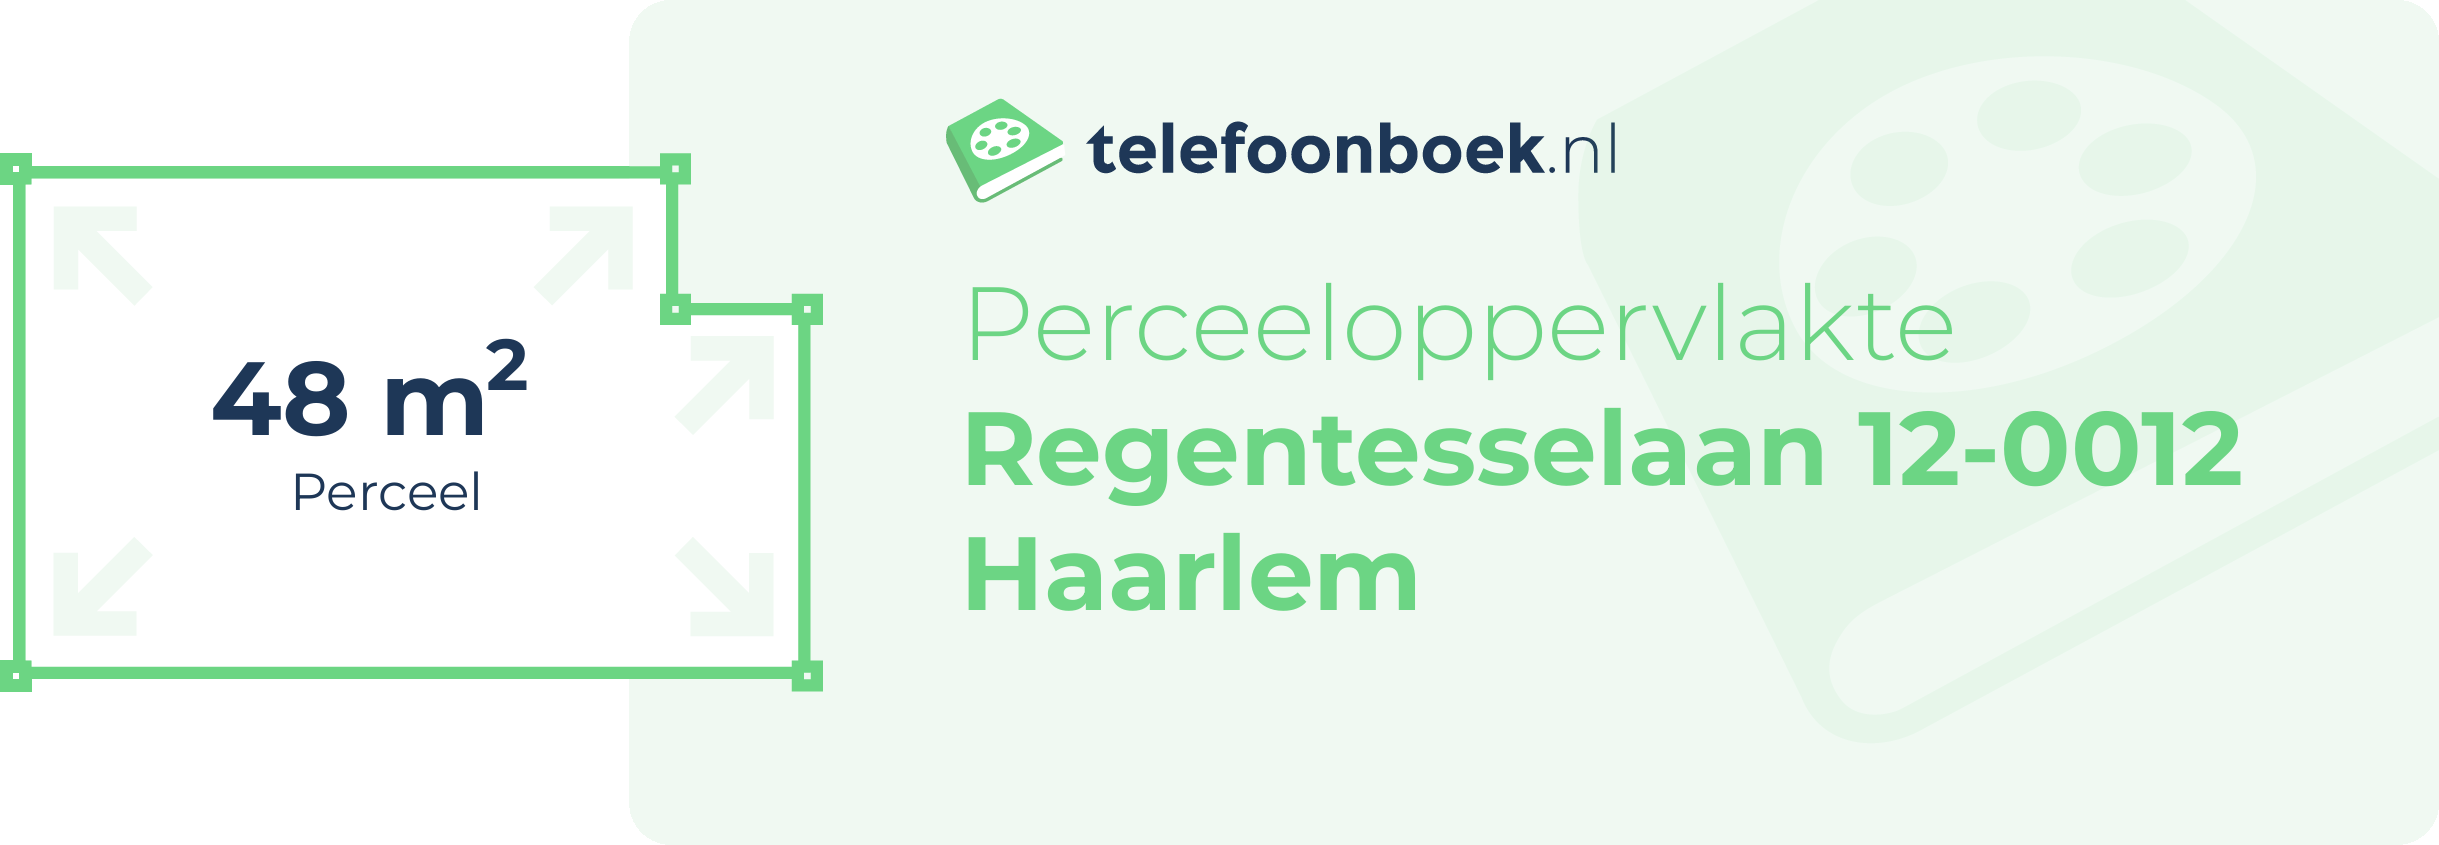 Perceeloppervlakte Regentesselaan 12-0012 Haarlem